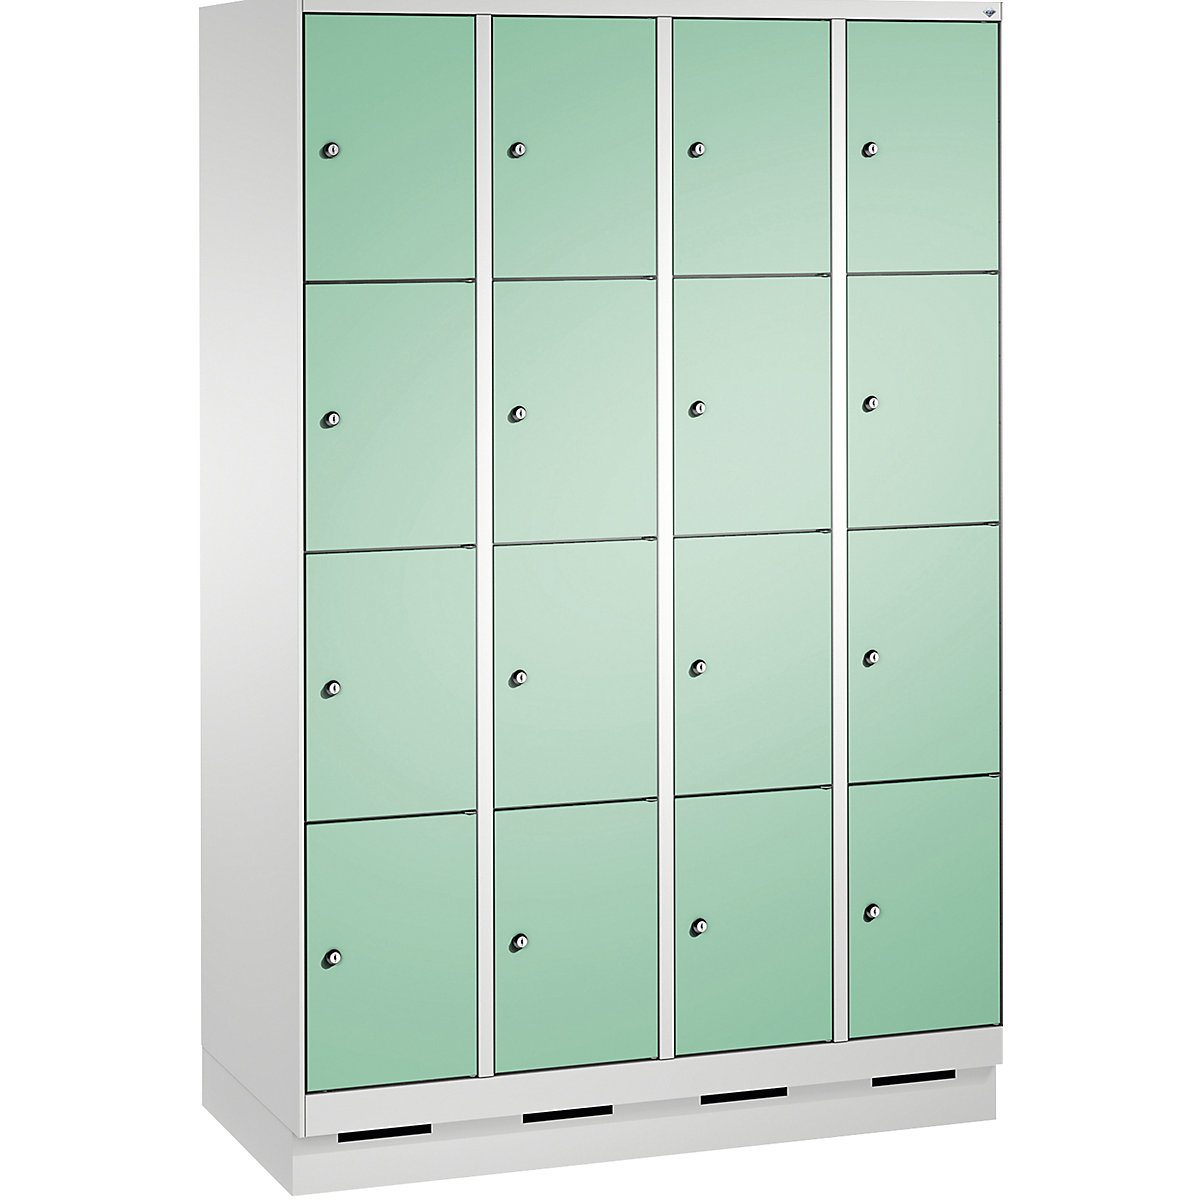 EVOLO locker unit, with plinth – C+P, 4 compartments, 4 shelf compartments each, compartment width 300 mm, light grey / light green